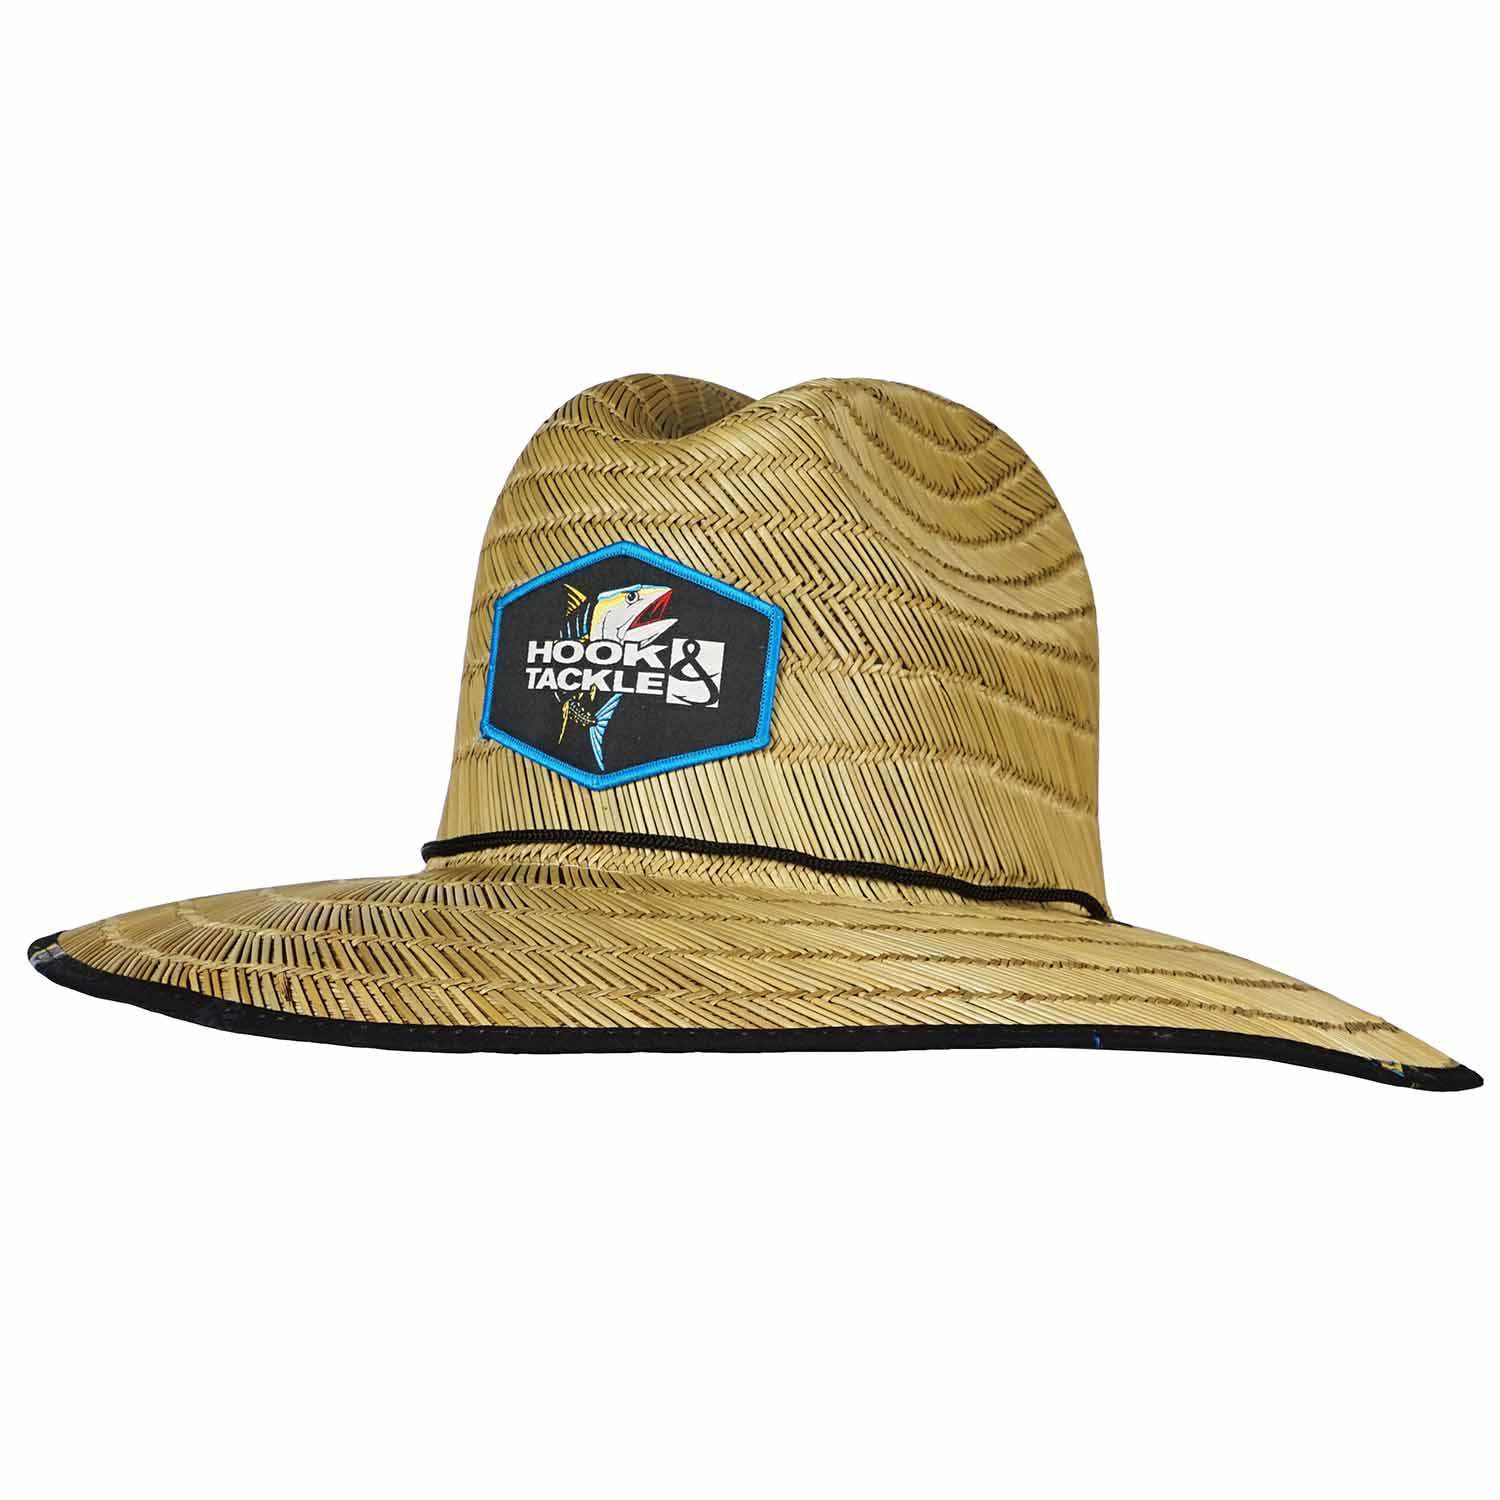 HOOK & TACKLE Tuna Lifeguard Straw Fishing Hat